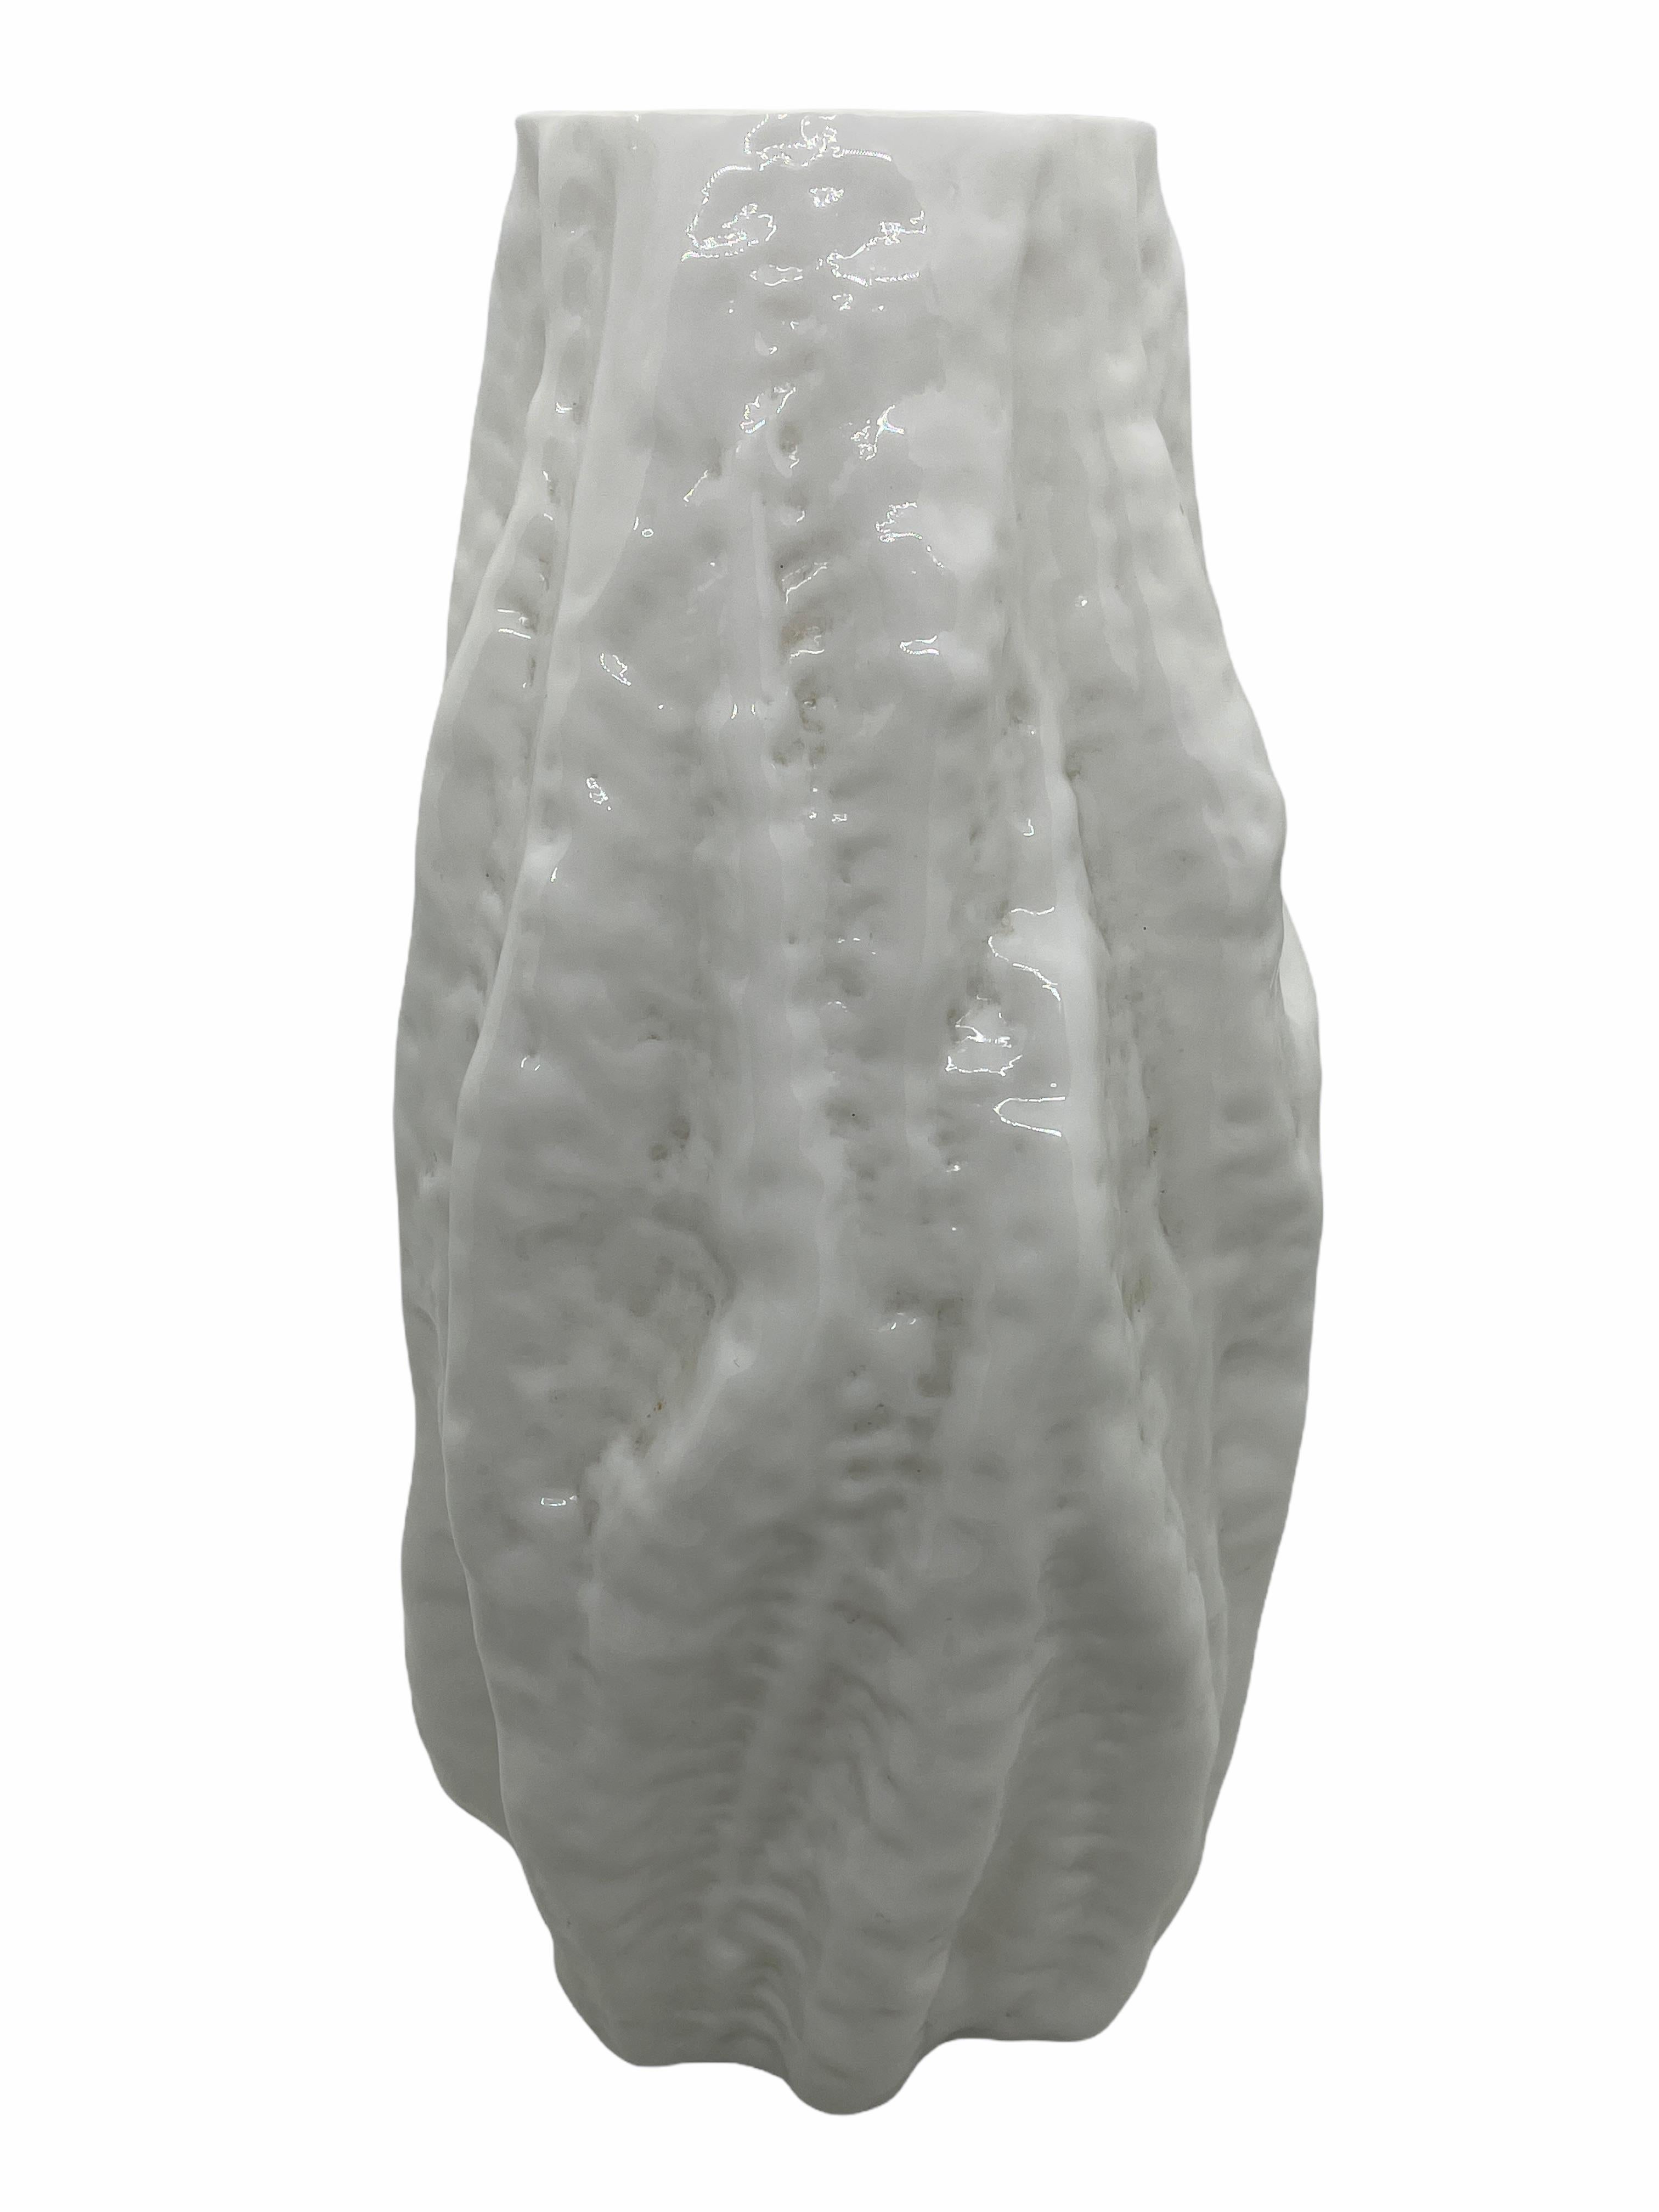 Stunning German Brutalist White Glass Rock Vase 1970s Mid-Century Modern For Sale 1